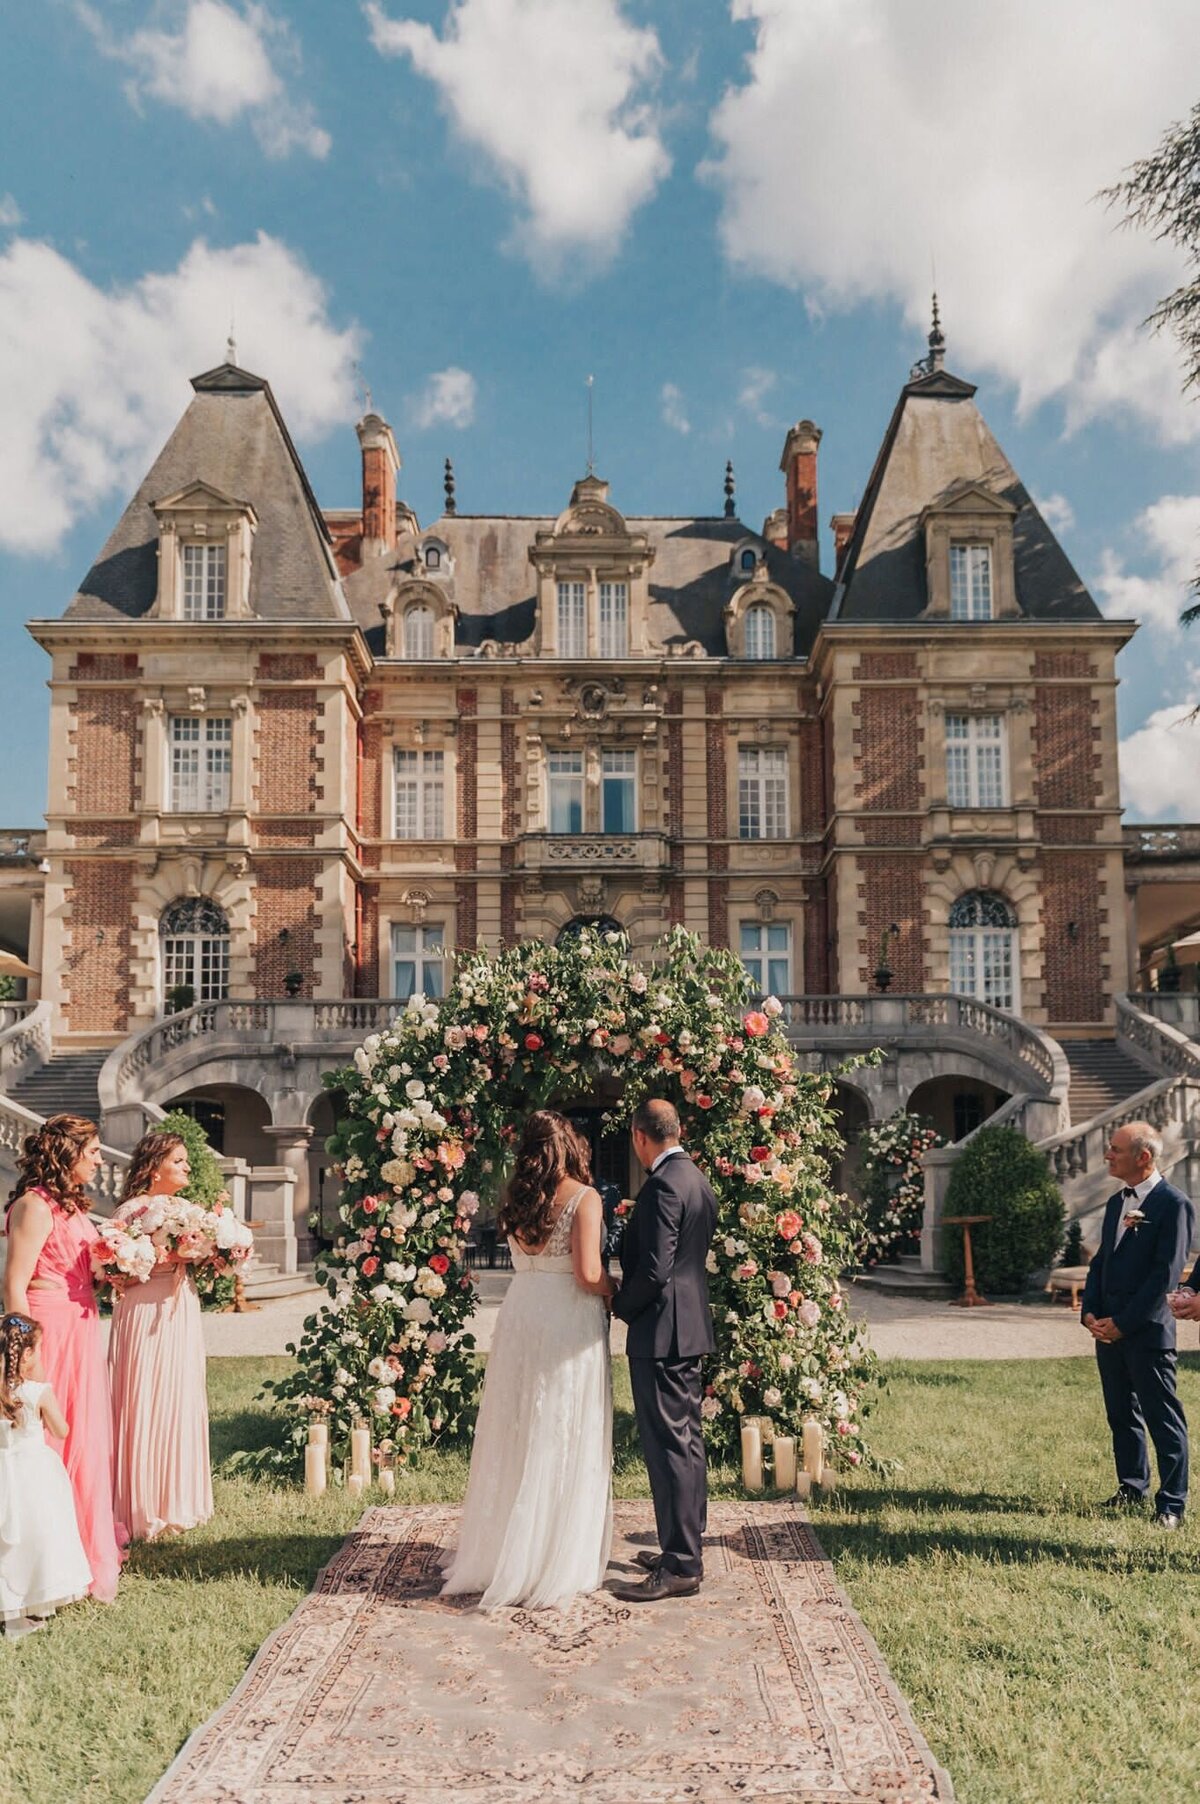 Timeless Elegance: Lebanese Wedding in a Chateau Setting in france